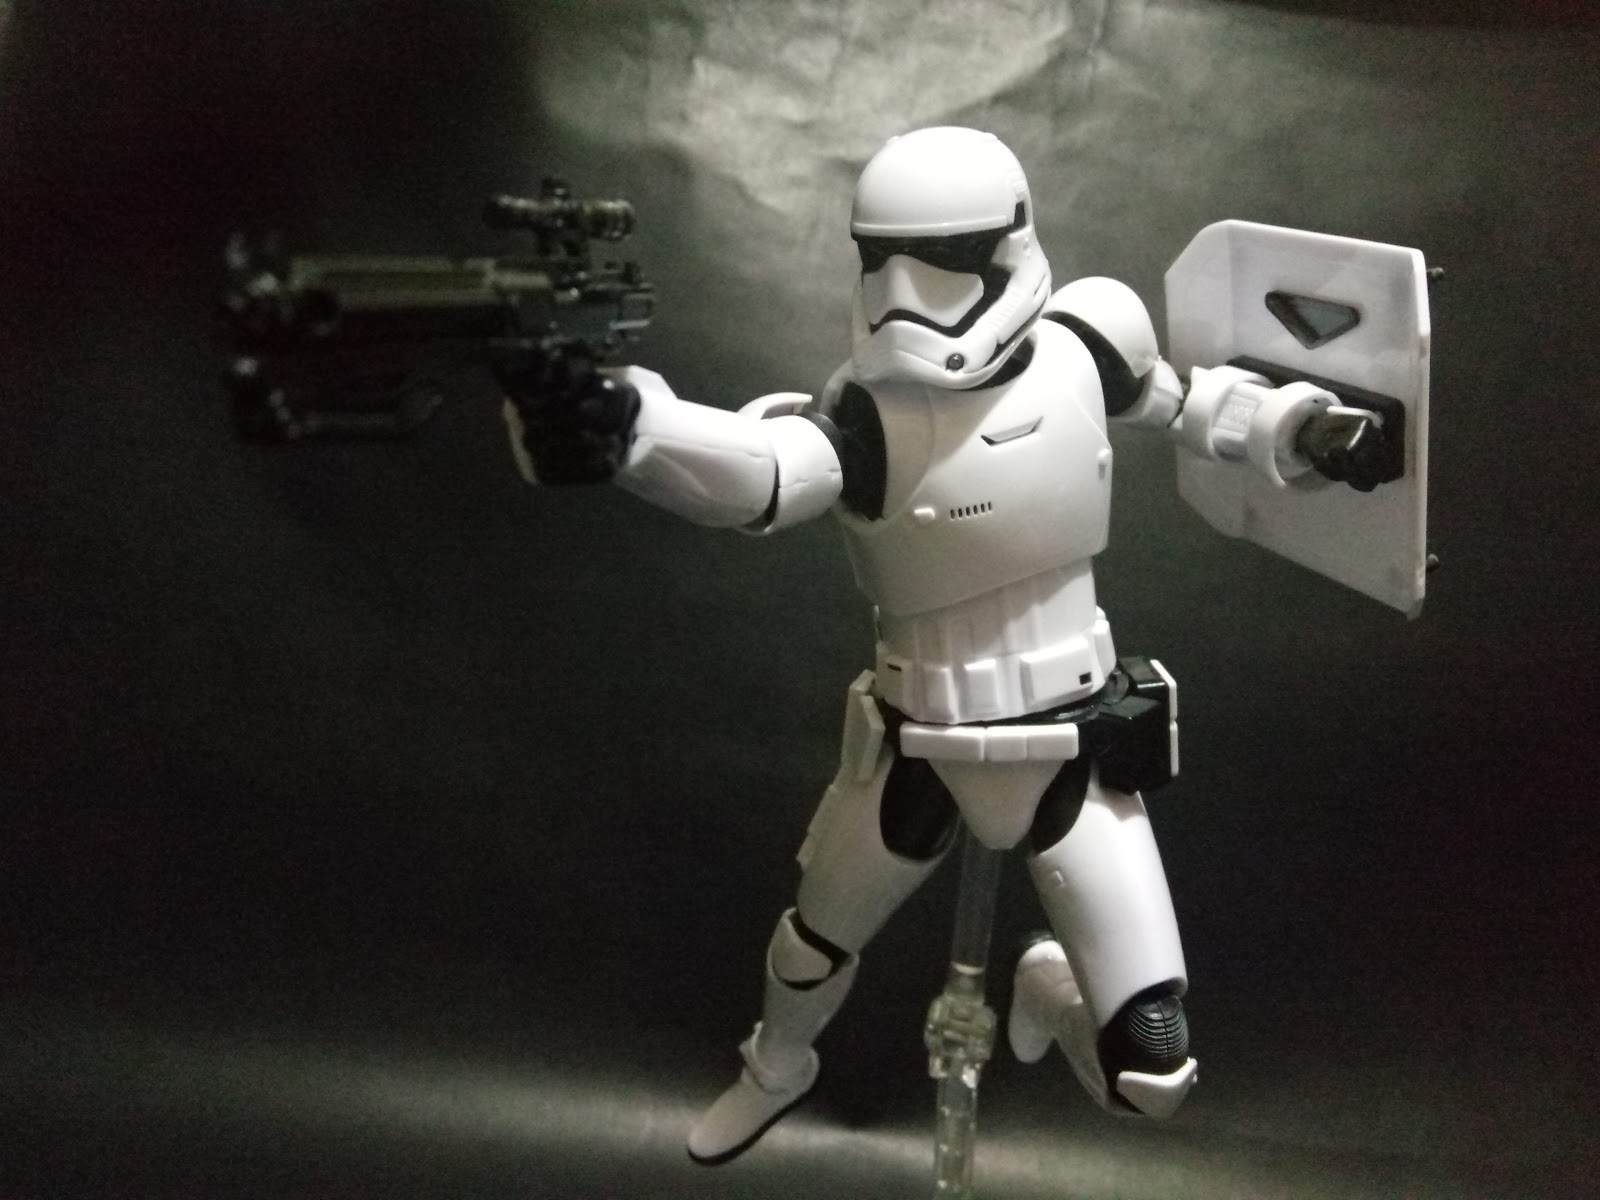 Bandai: Star Wars Stormtrooper 1:12 Scale Model Kit Review